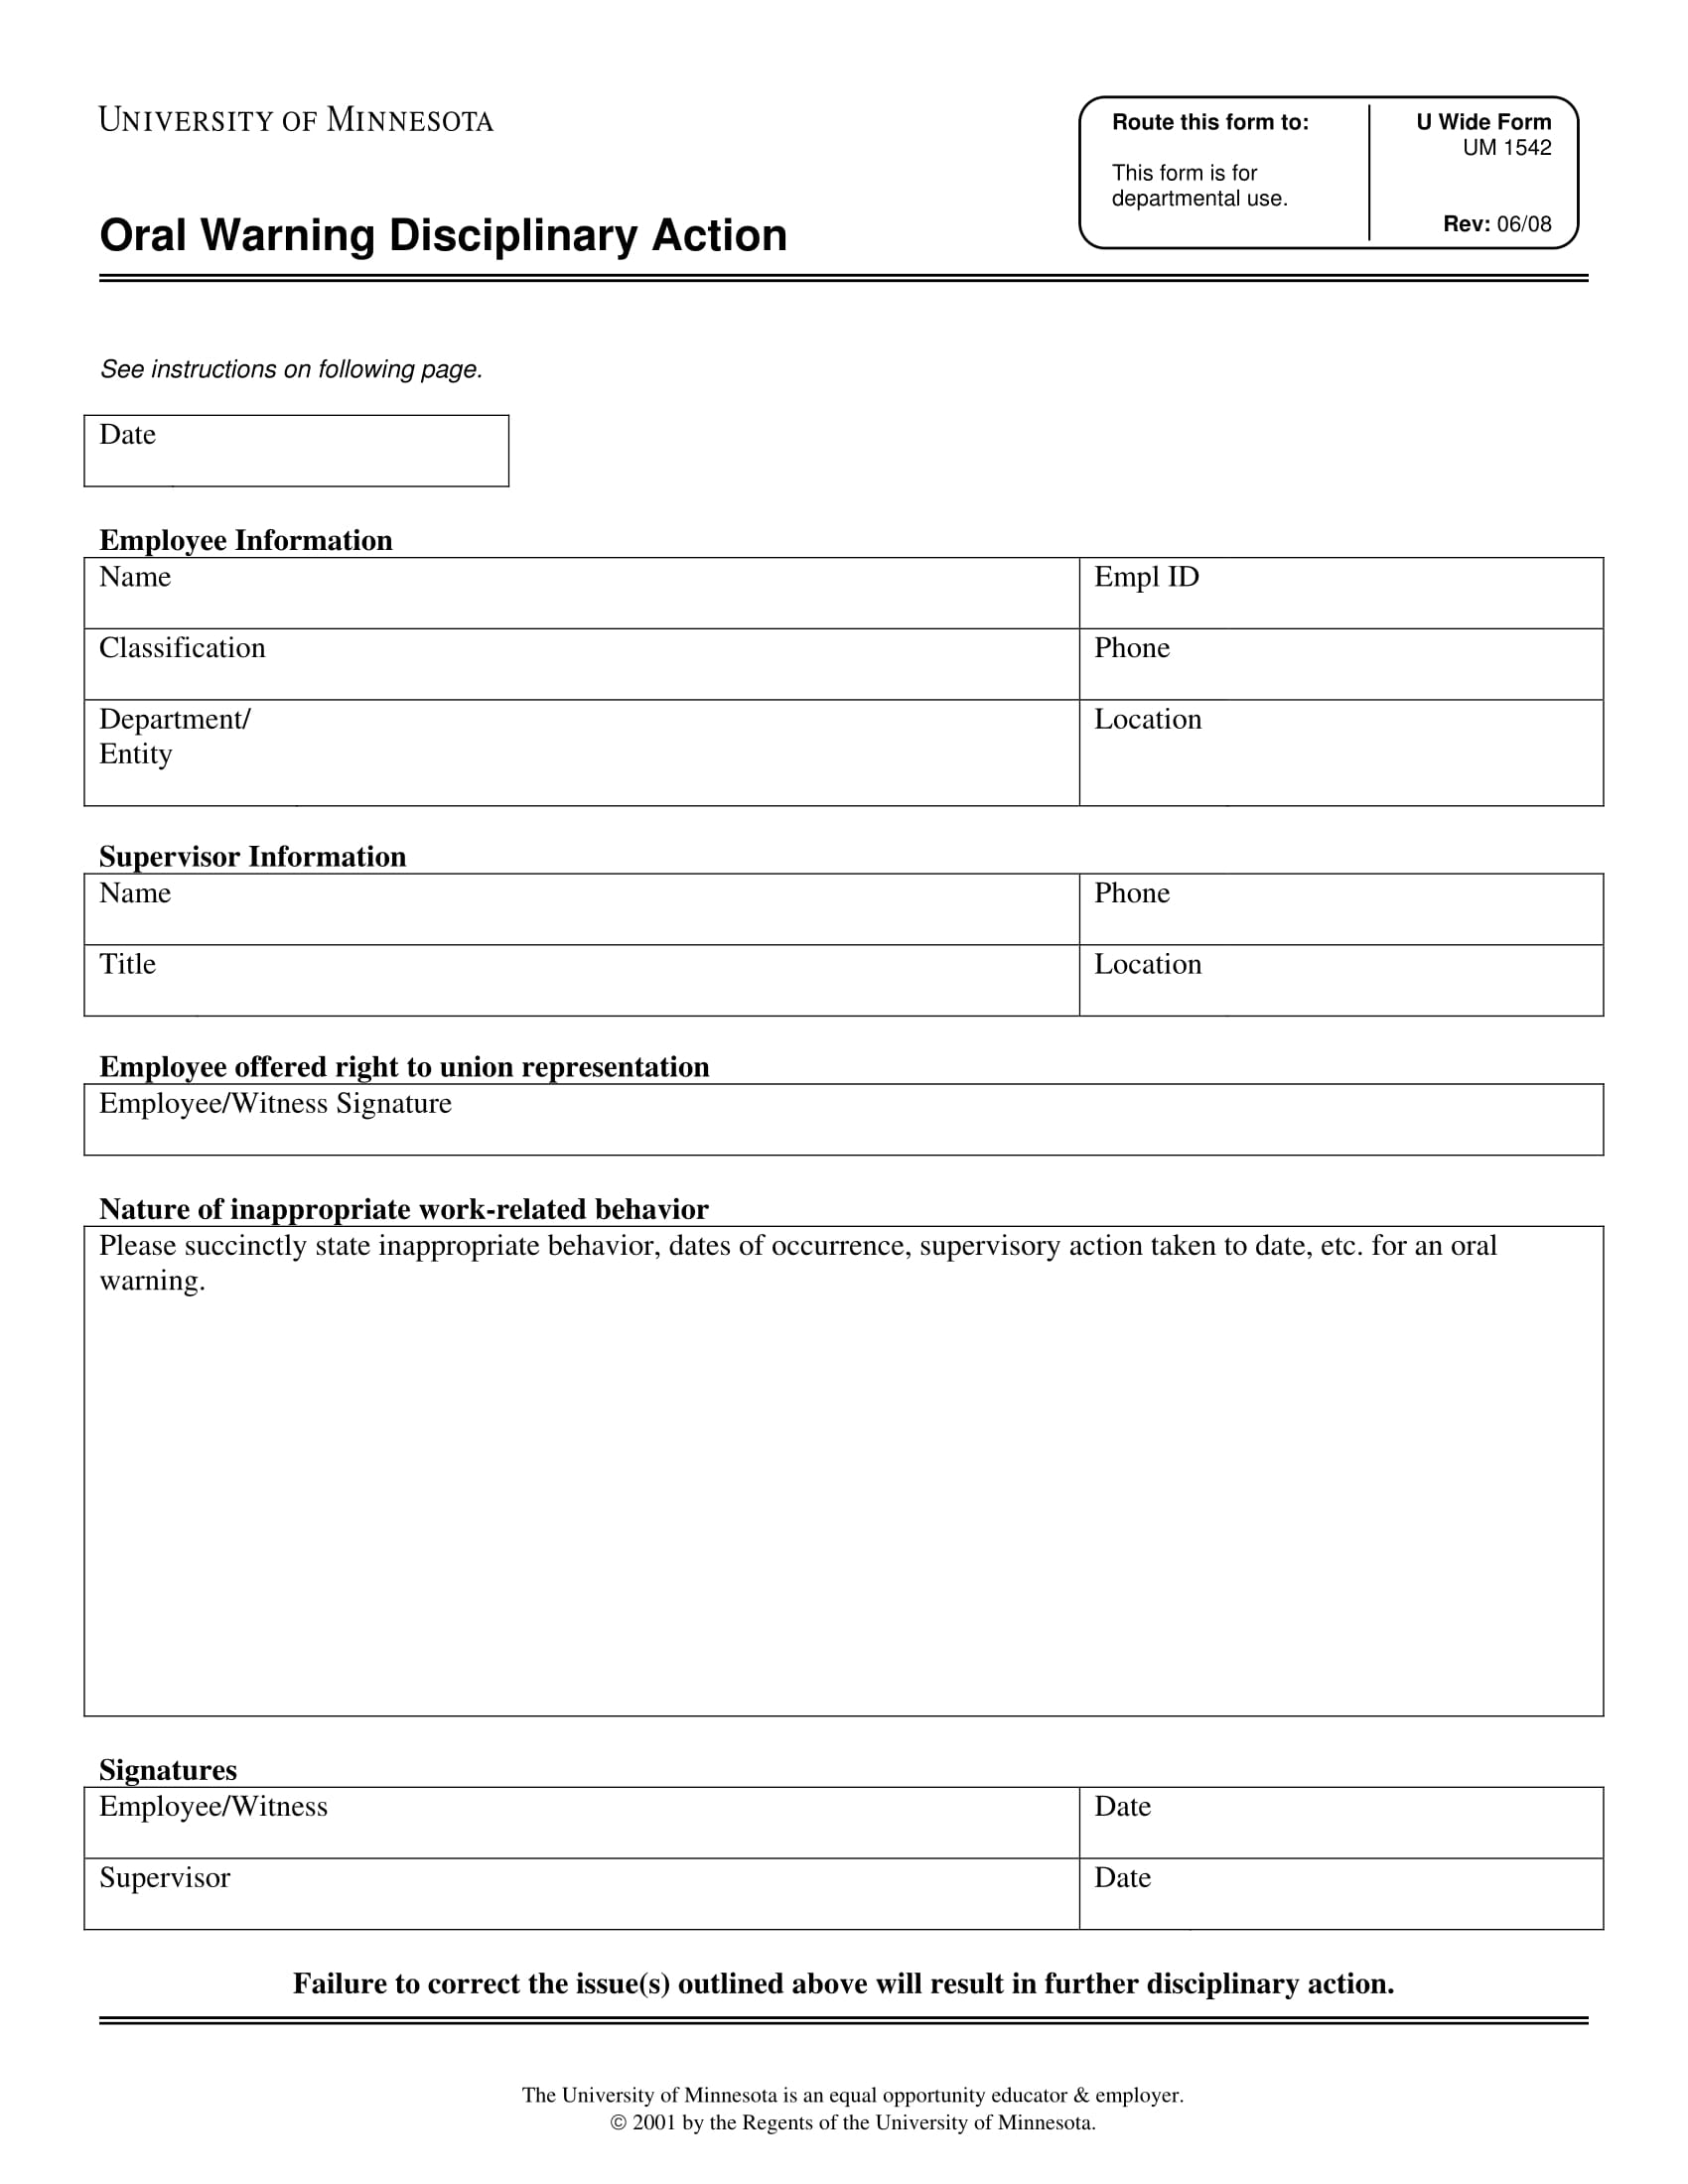 oral warning disciplinary action form 1